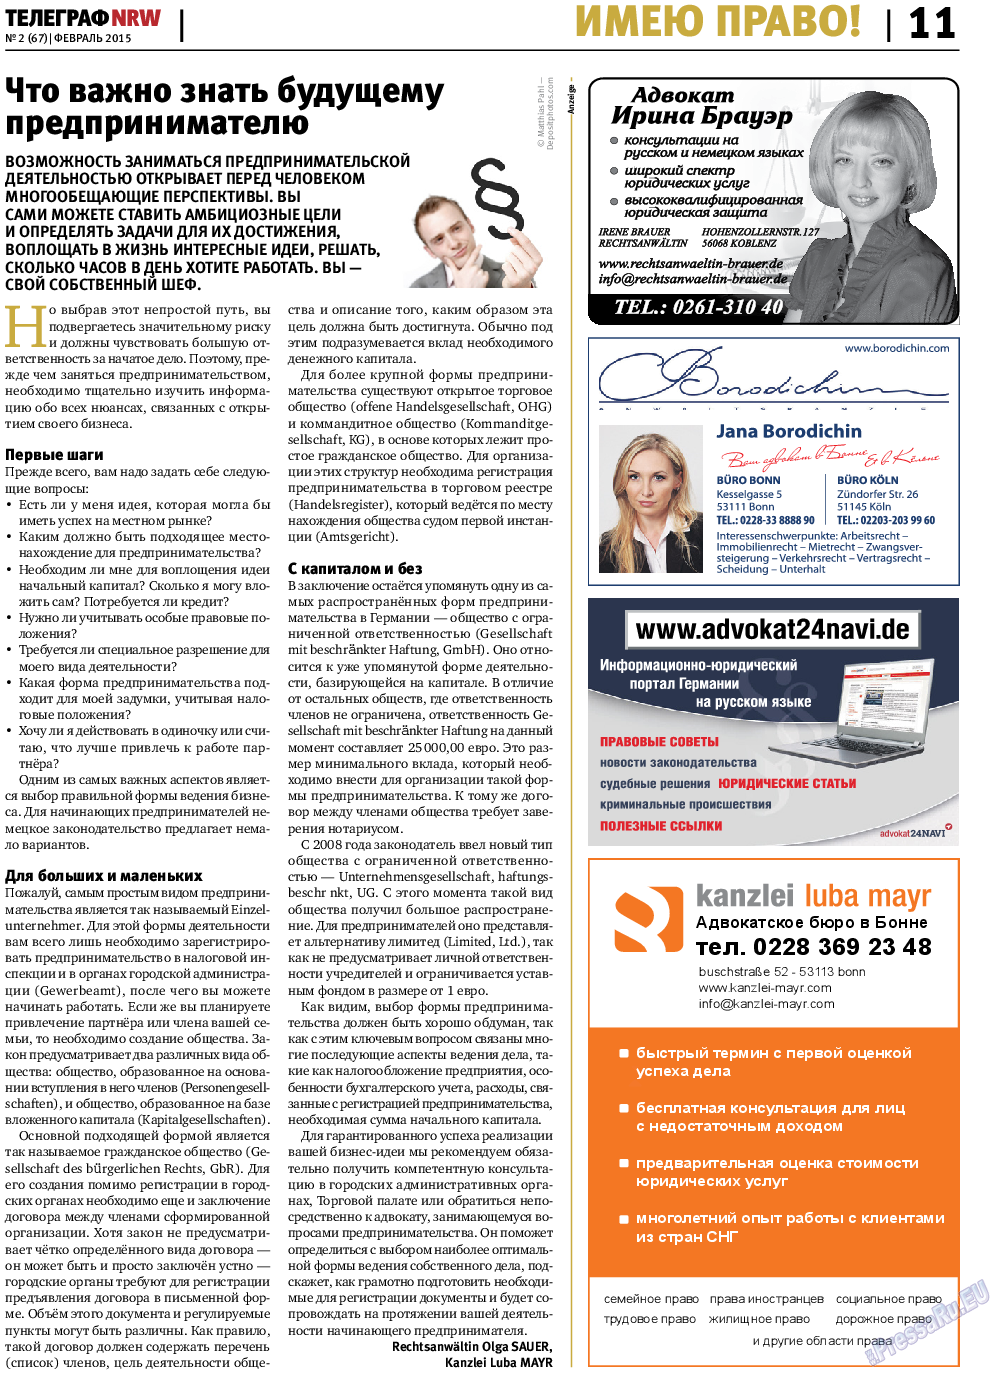 Телеграф NRW, газета. 2015 №2 стр.11